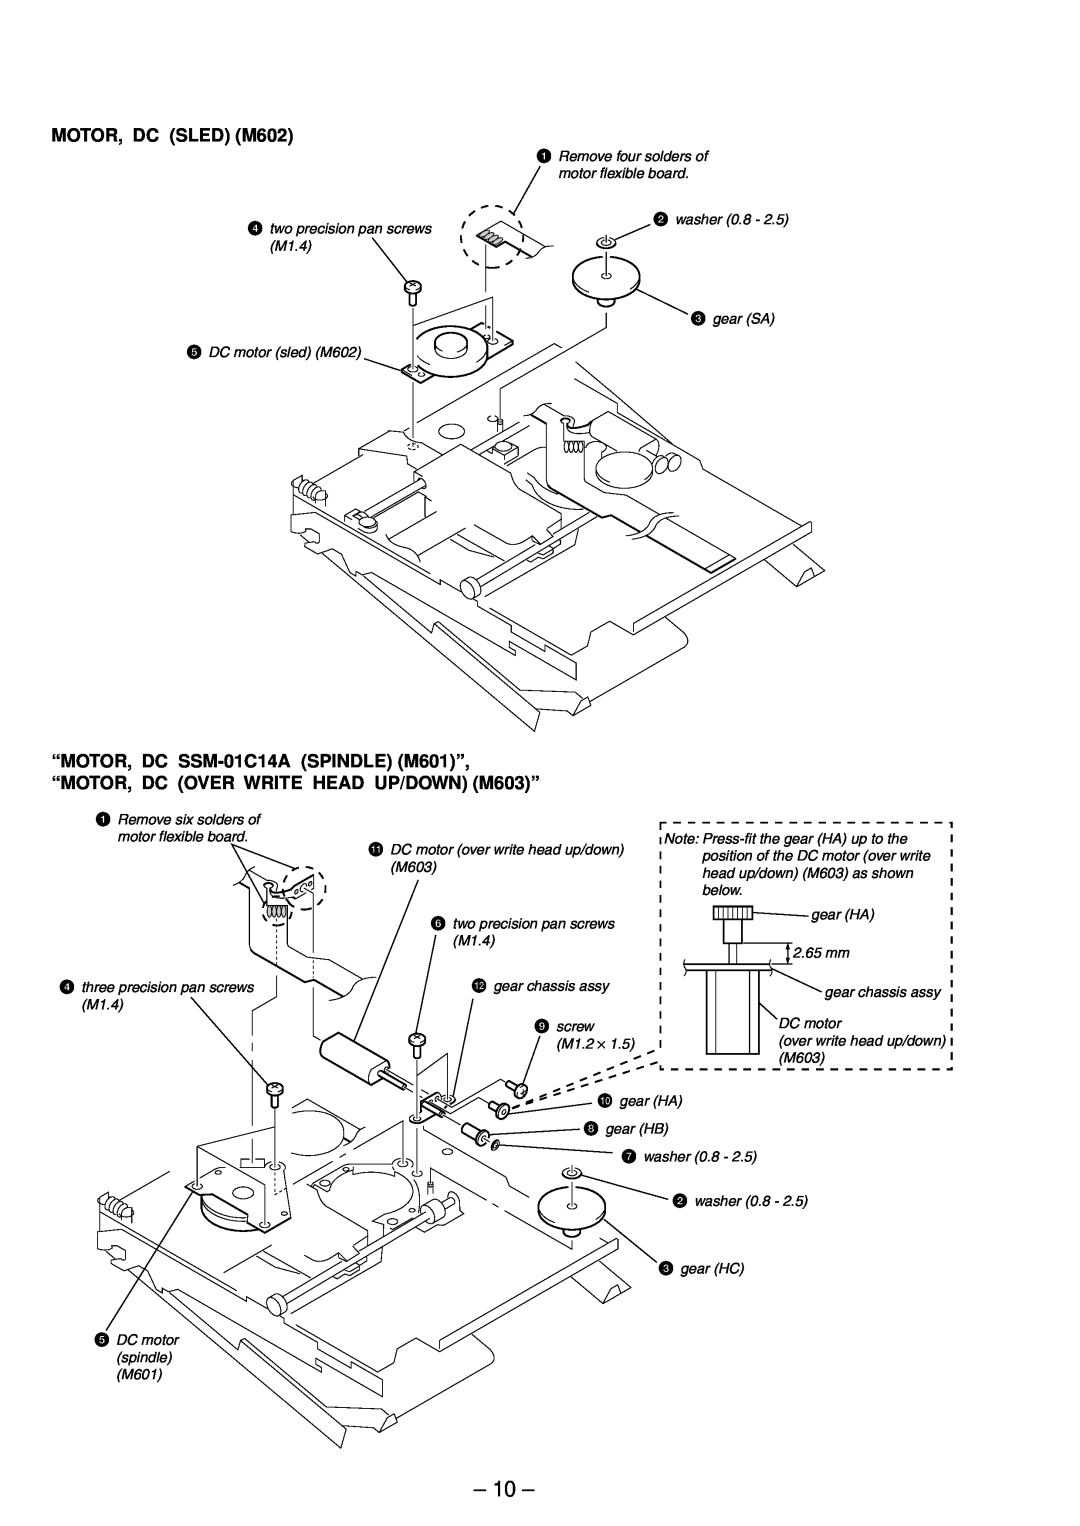 Sony MZ-R91 service manual MOTOR, DC SLED M602 